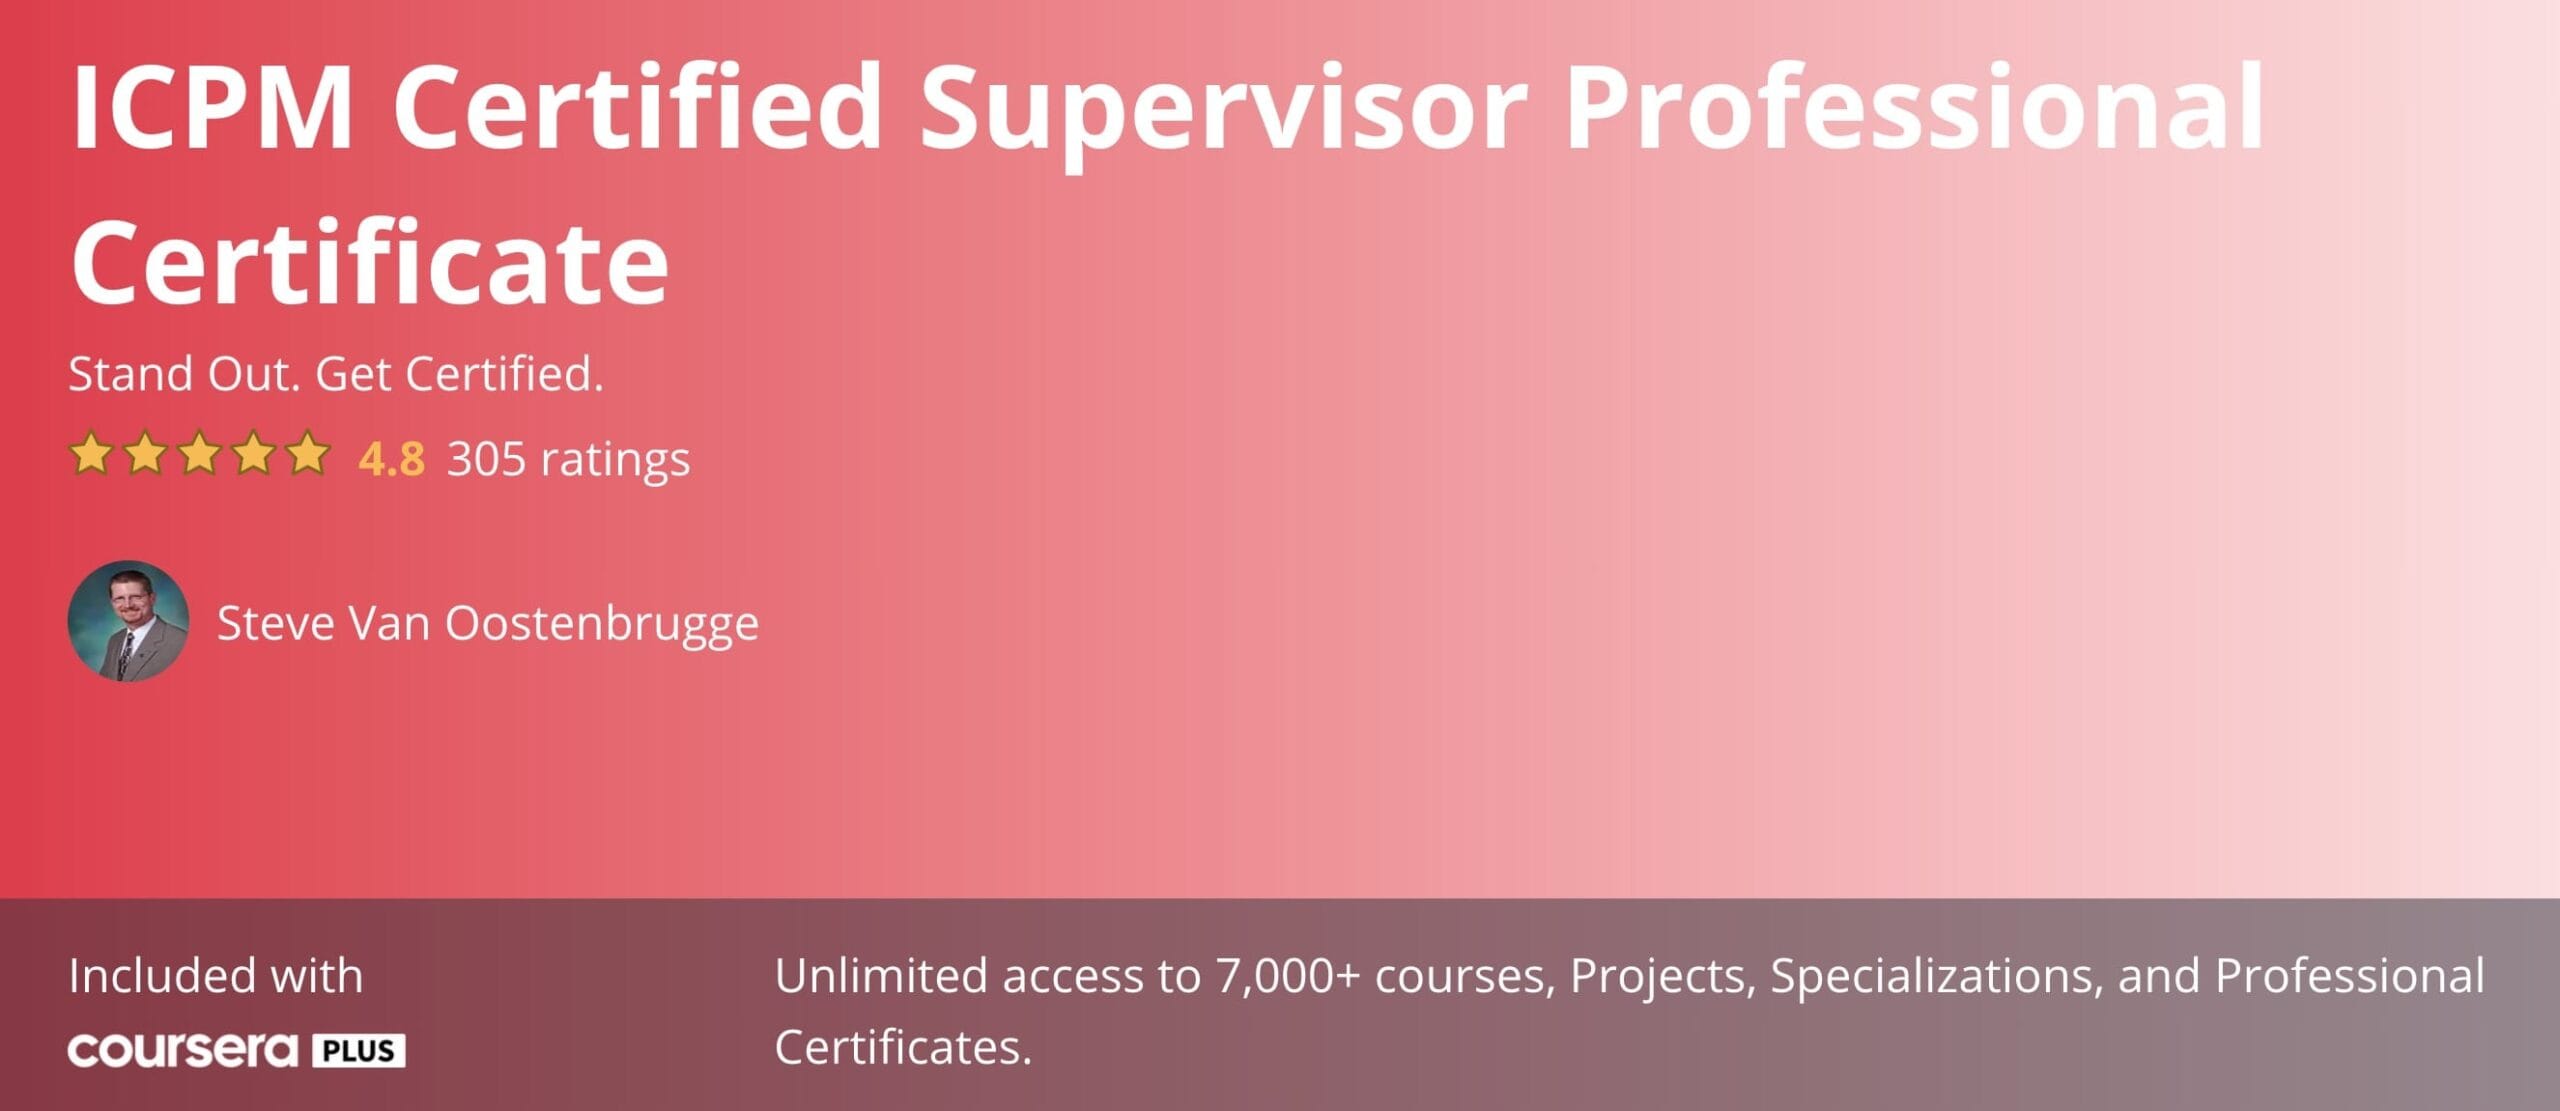 ICPM Certified Supervisor Professional Certificate